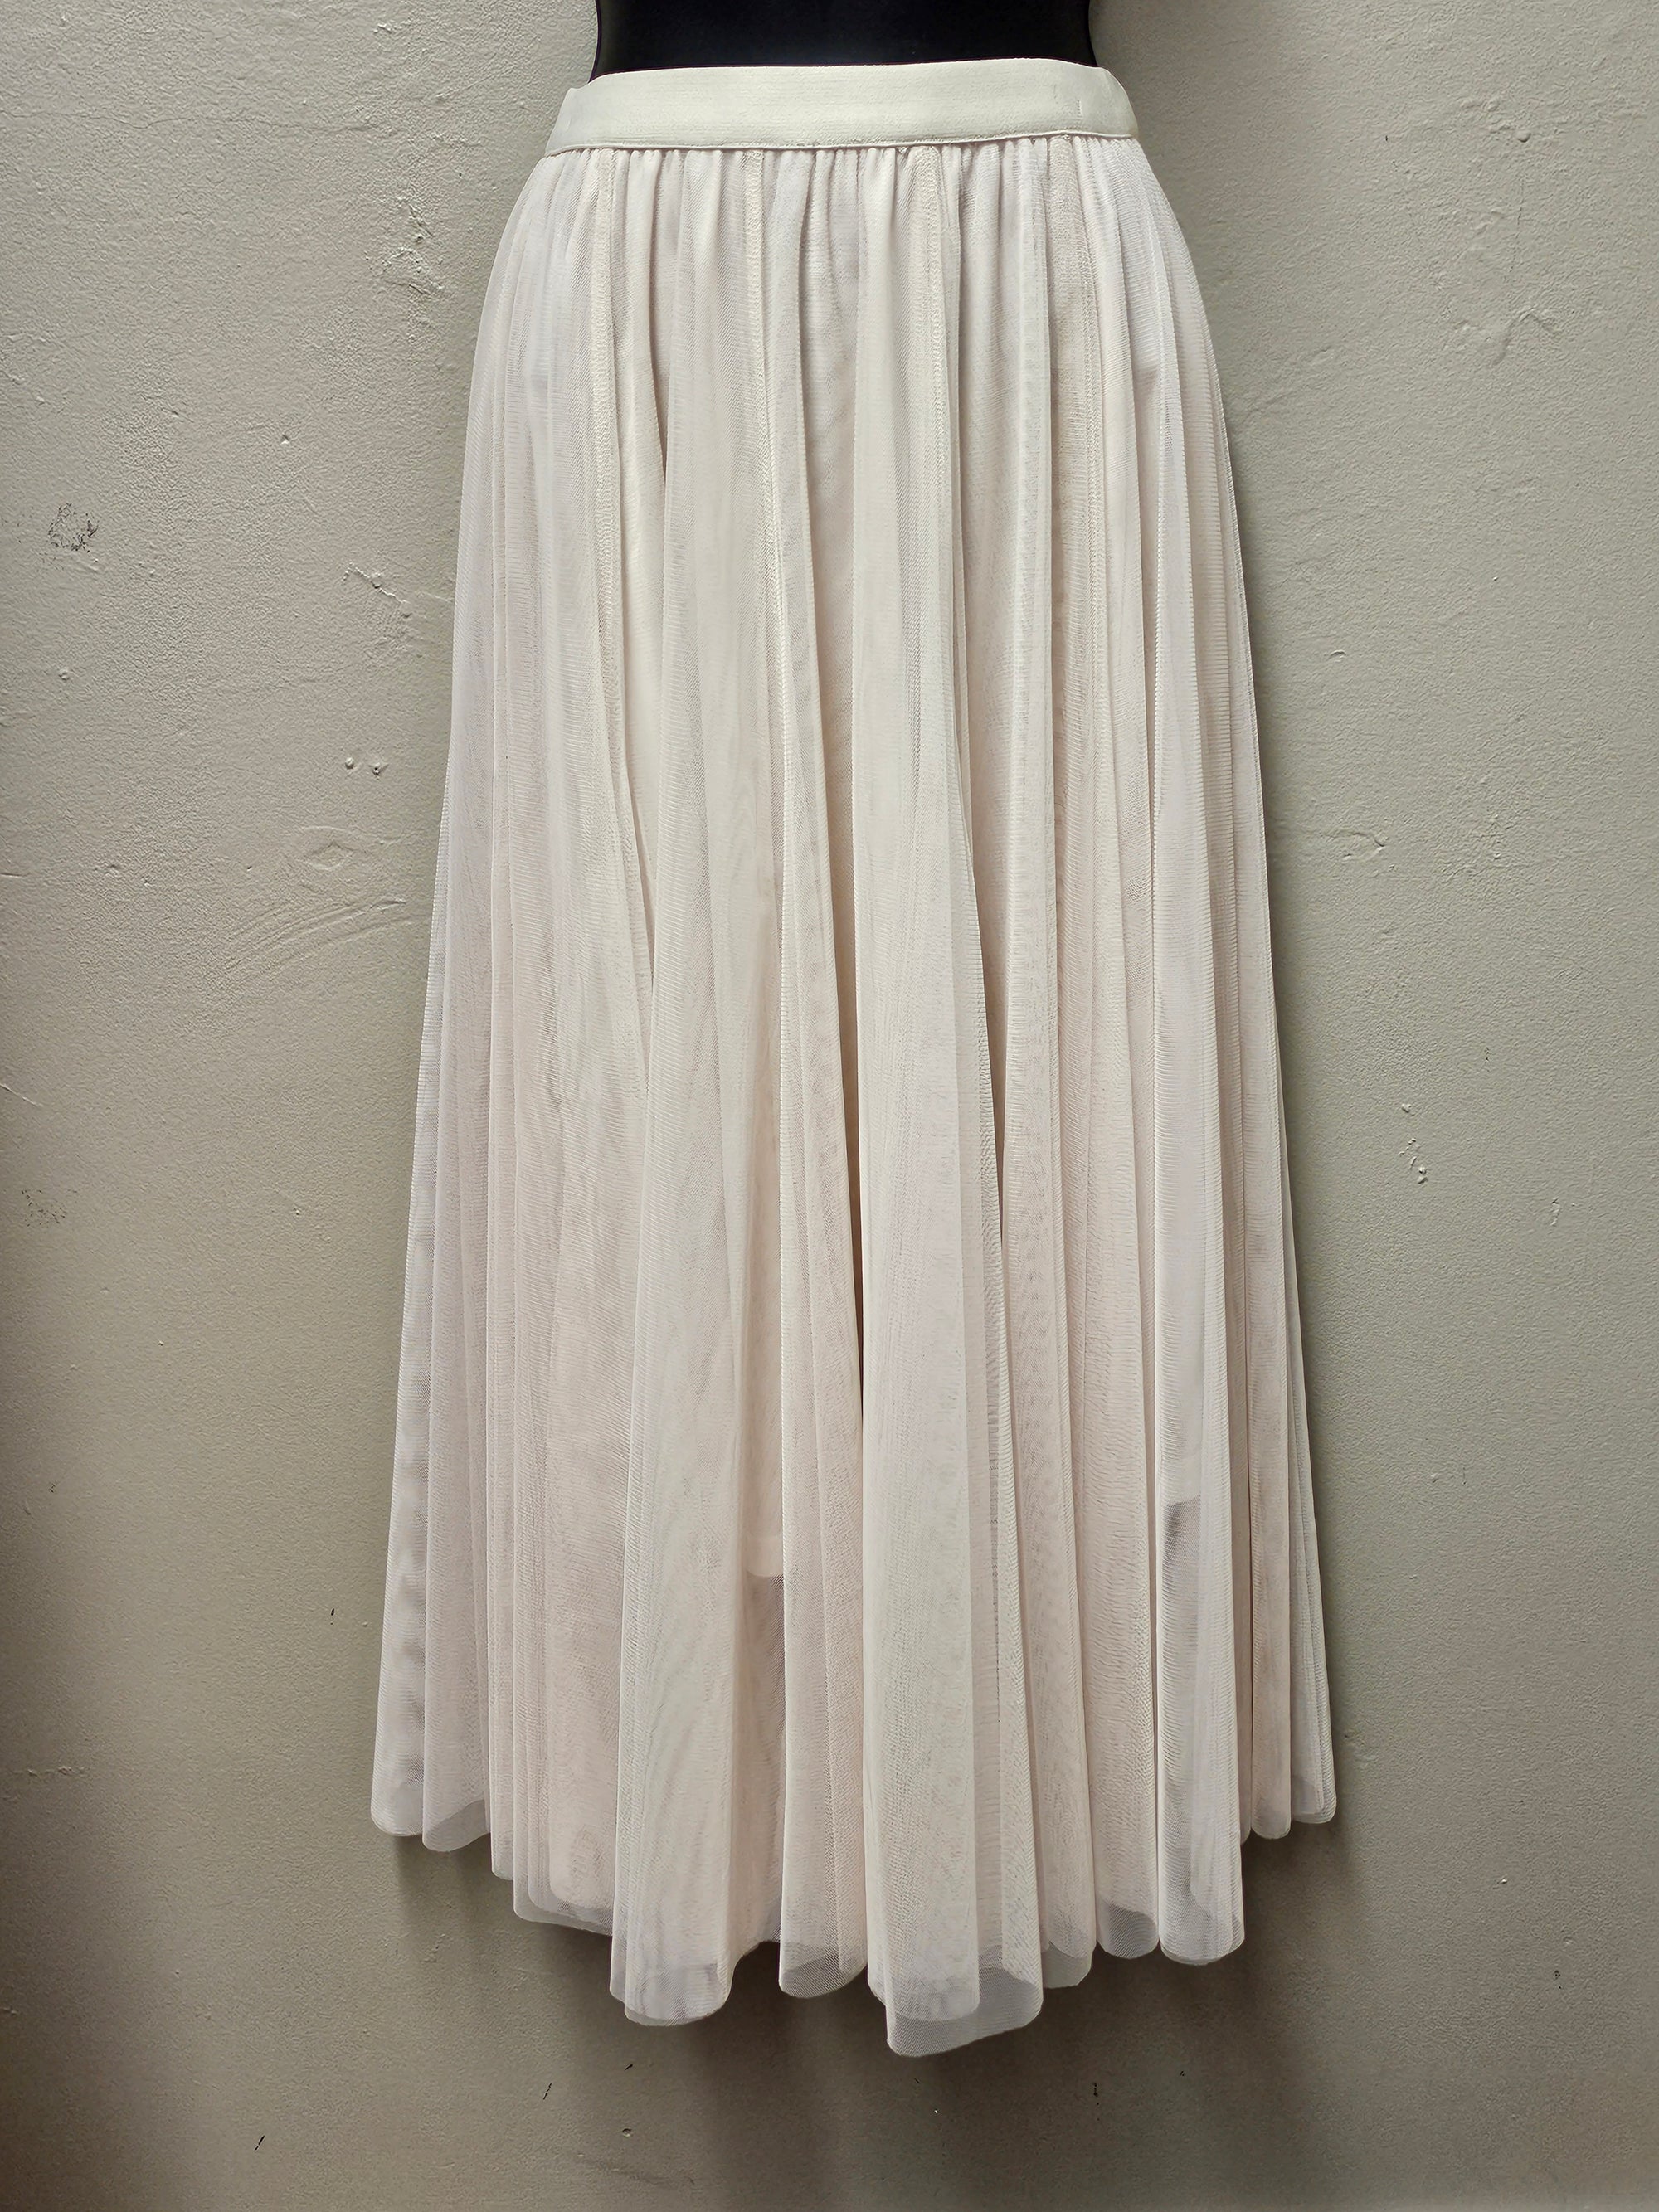 4 Color Ways - Elegant Long Tulle Skirt